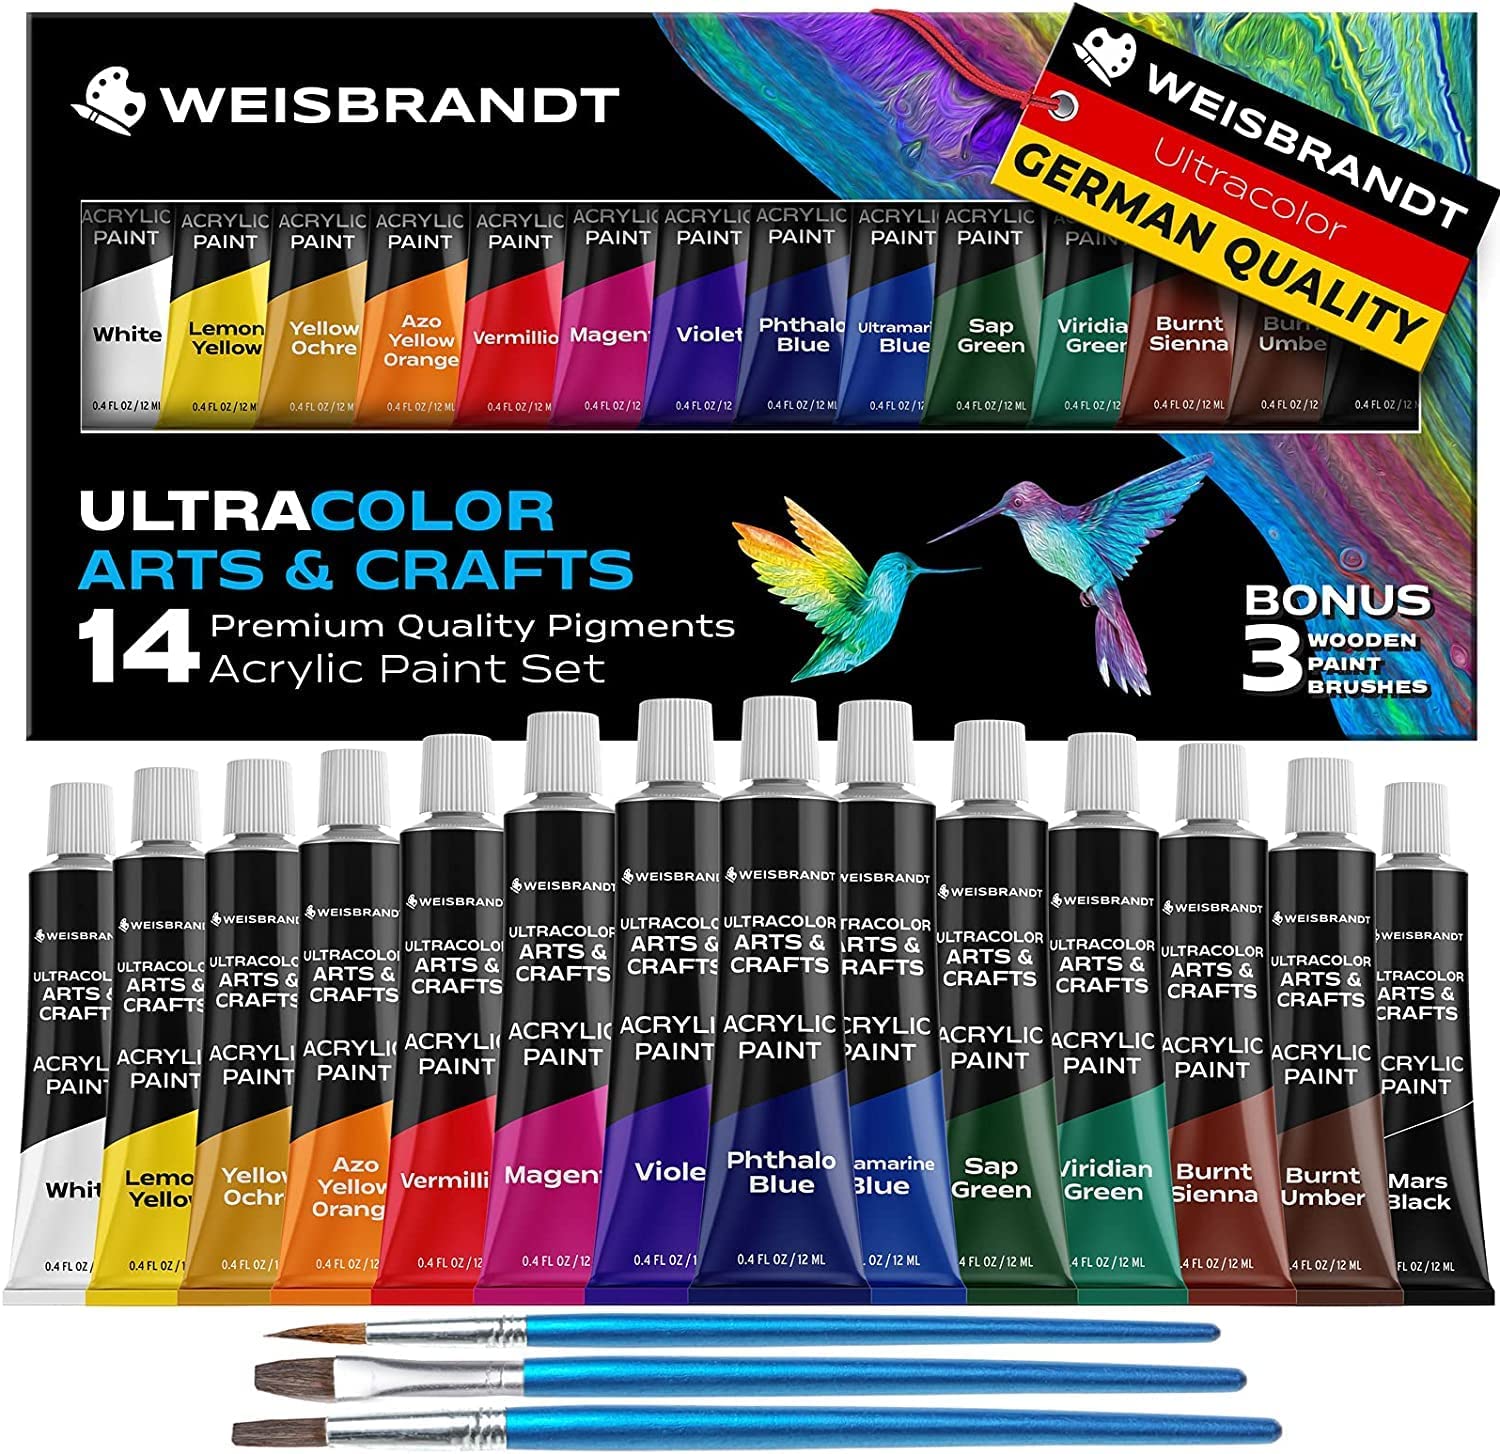 U S Art Supply 75ml Acrylic 12 Color Paint Extra Large Tube Artist Painting Set